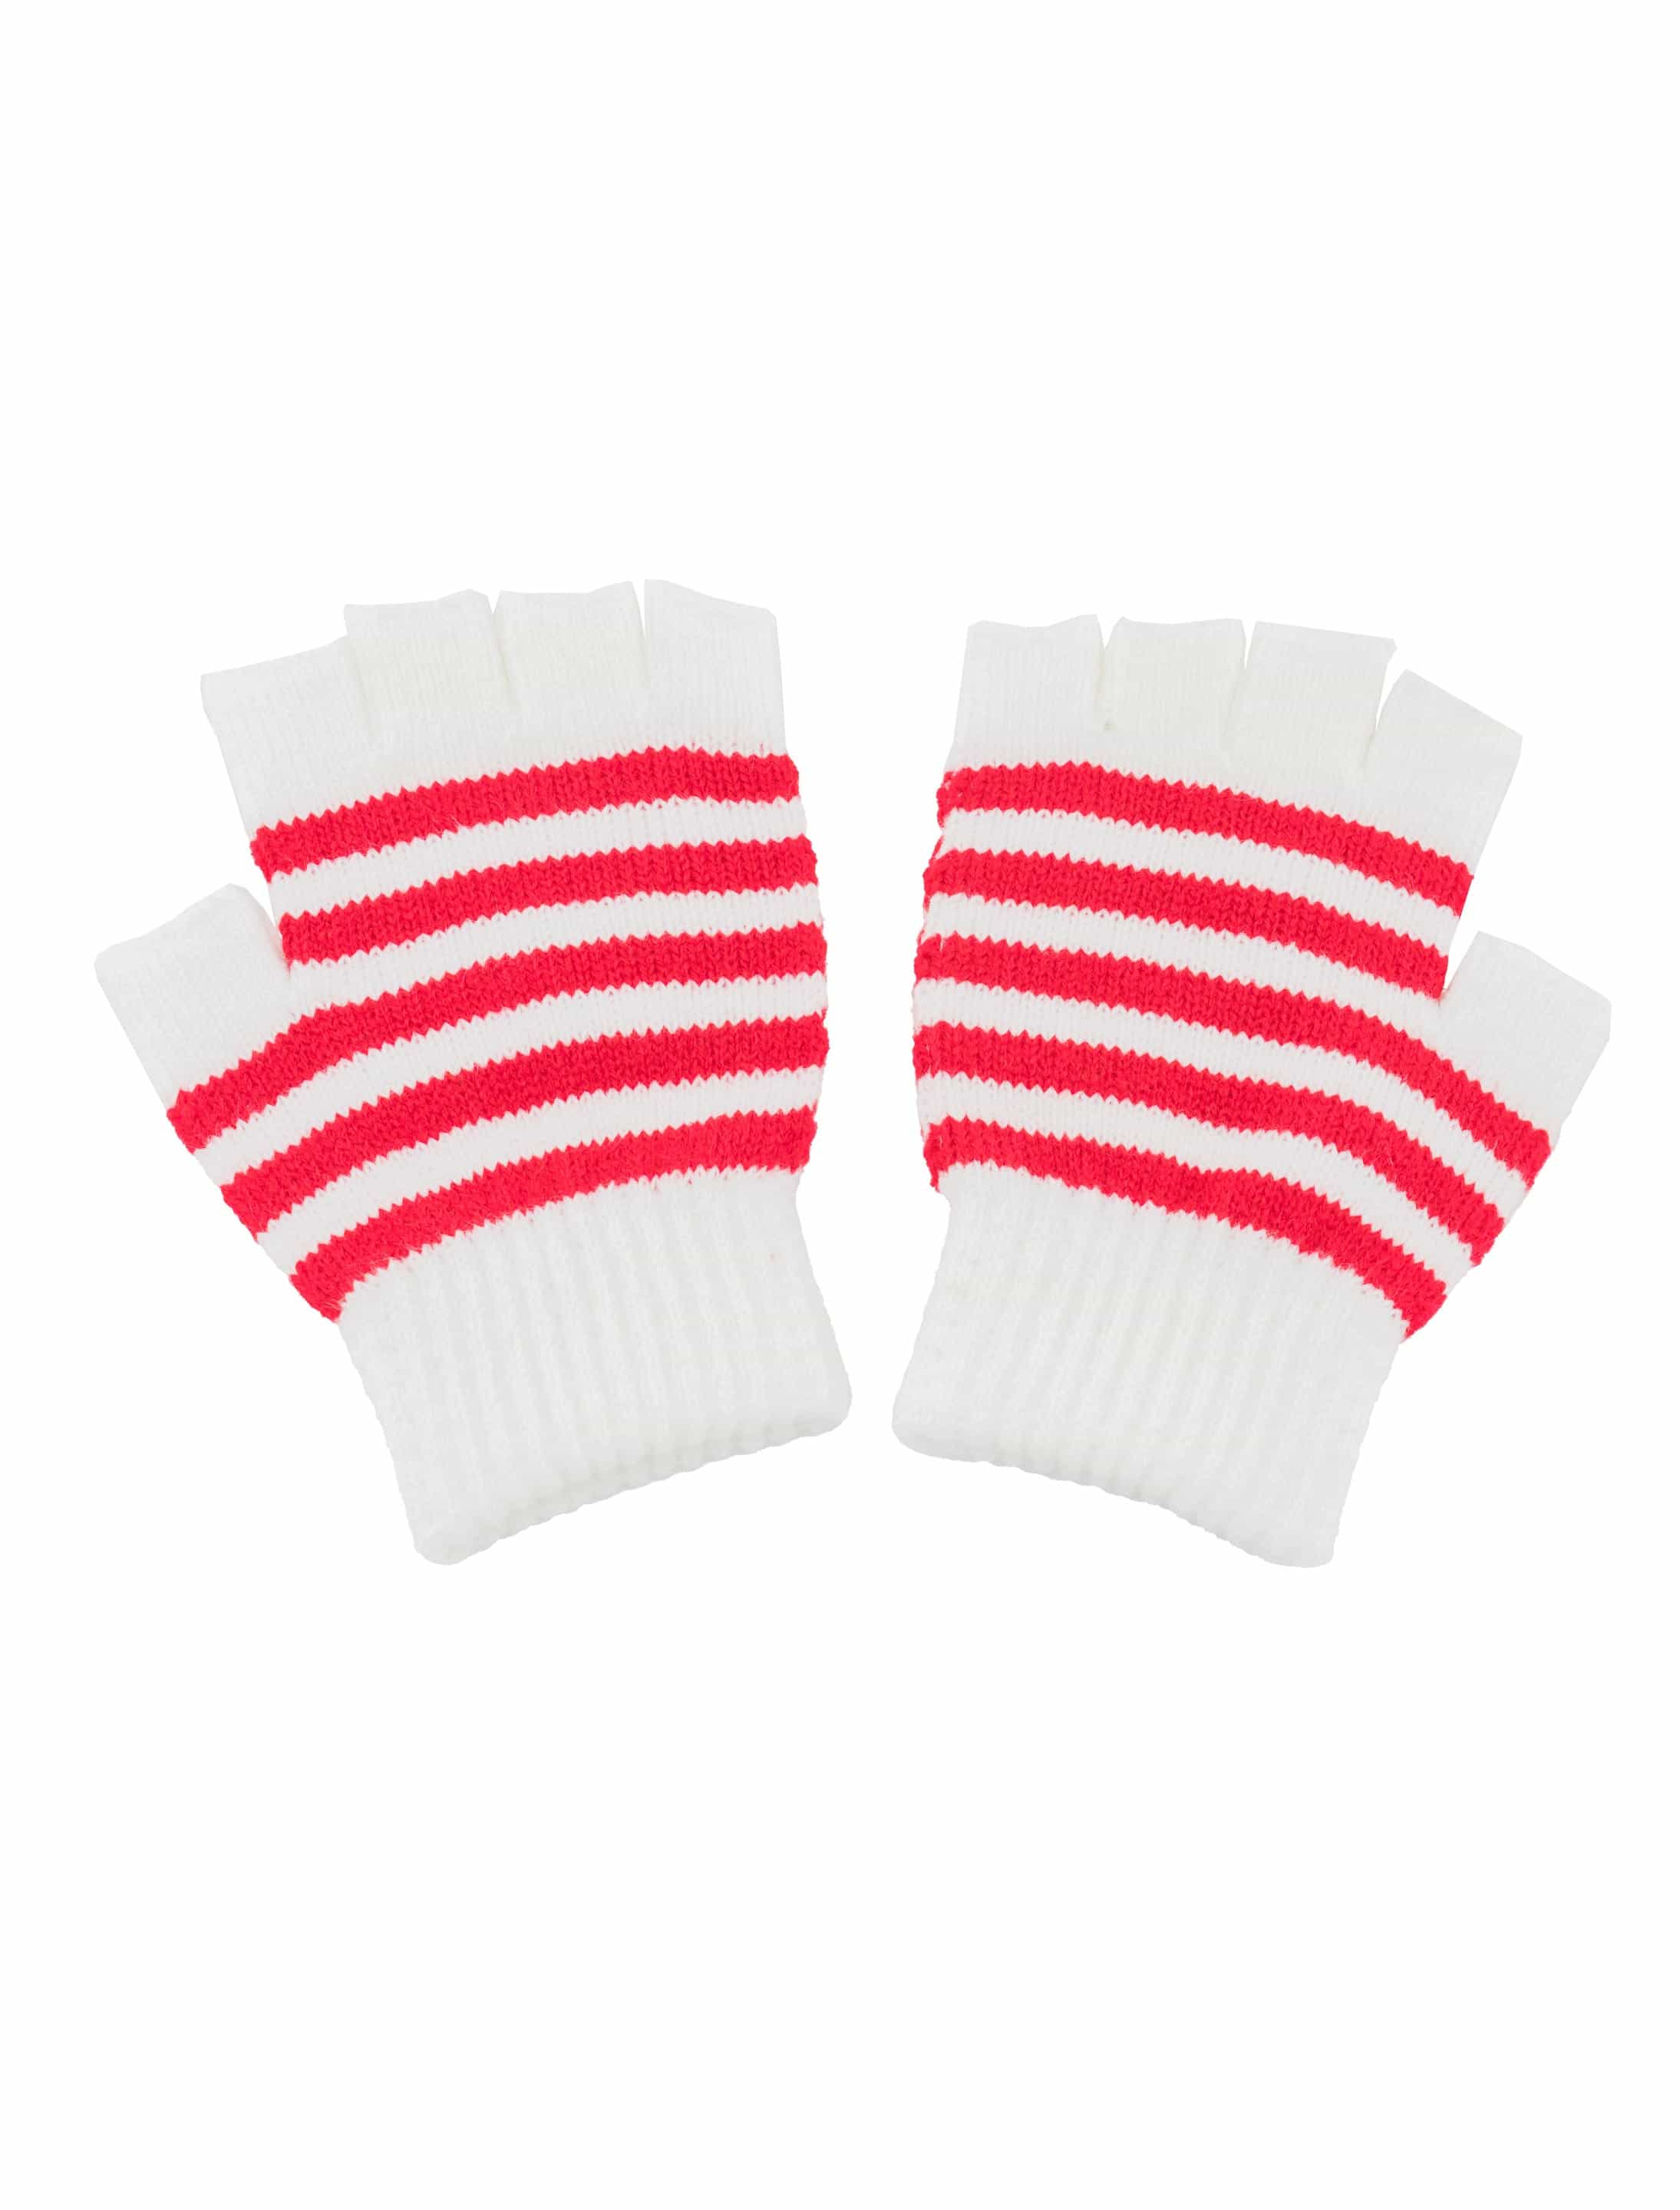 Strickhandschuhe Kinder fingerlos rot/weiß